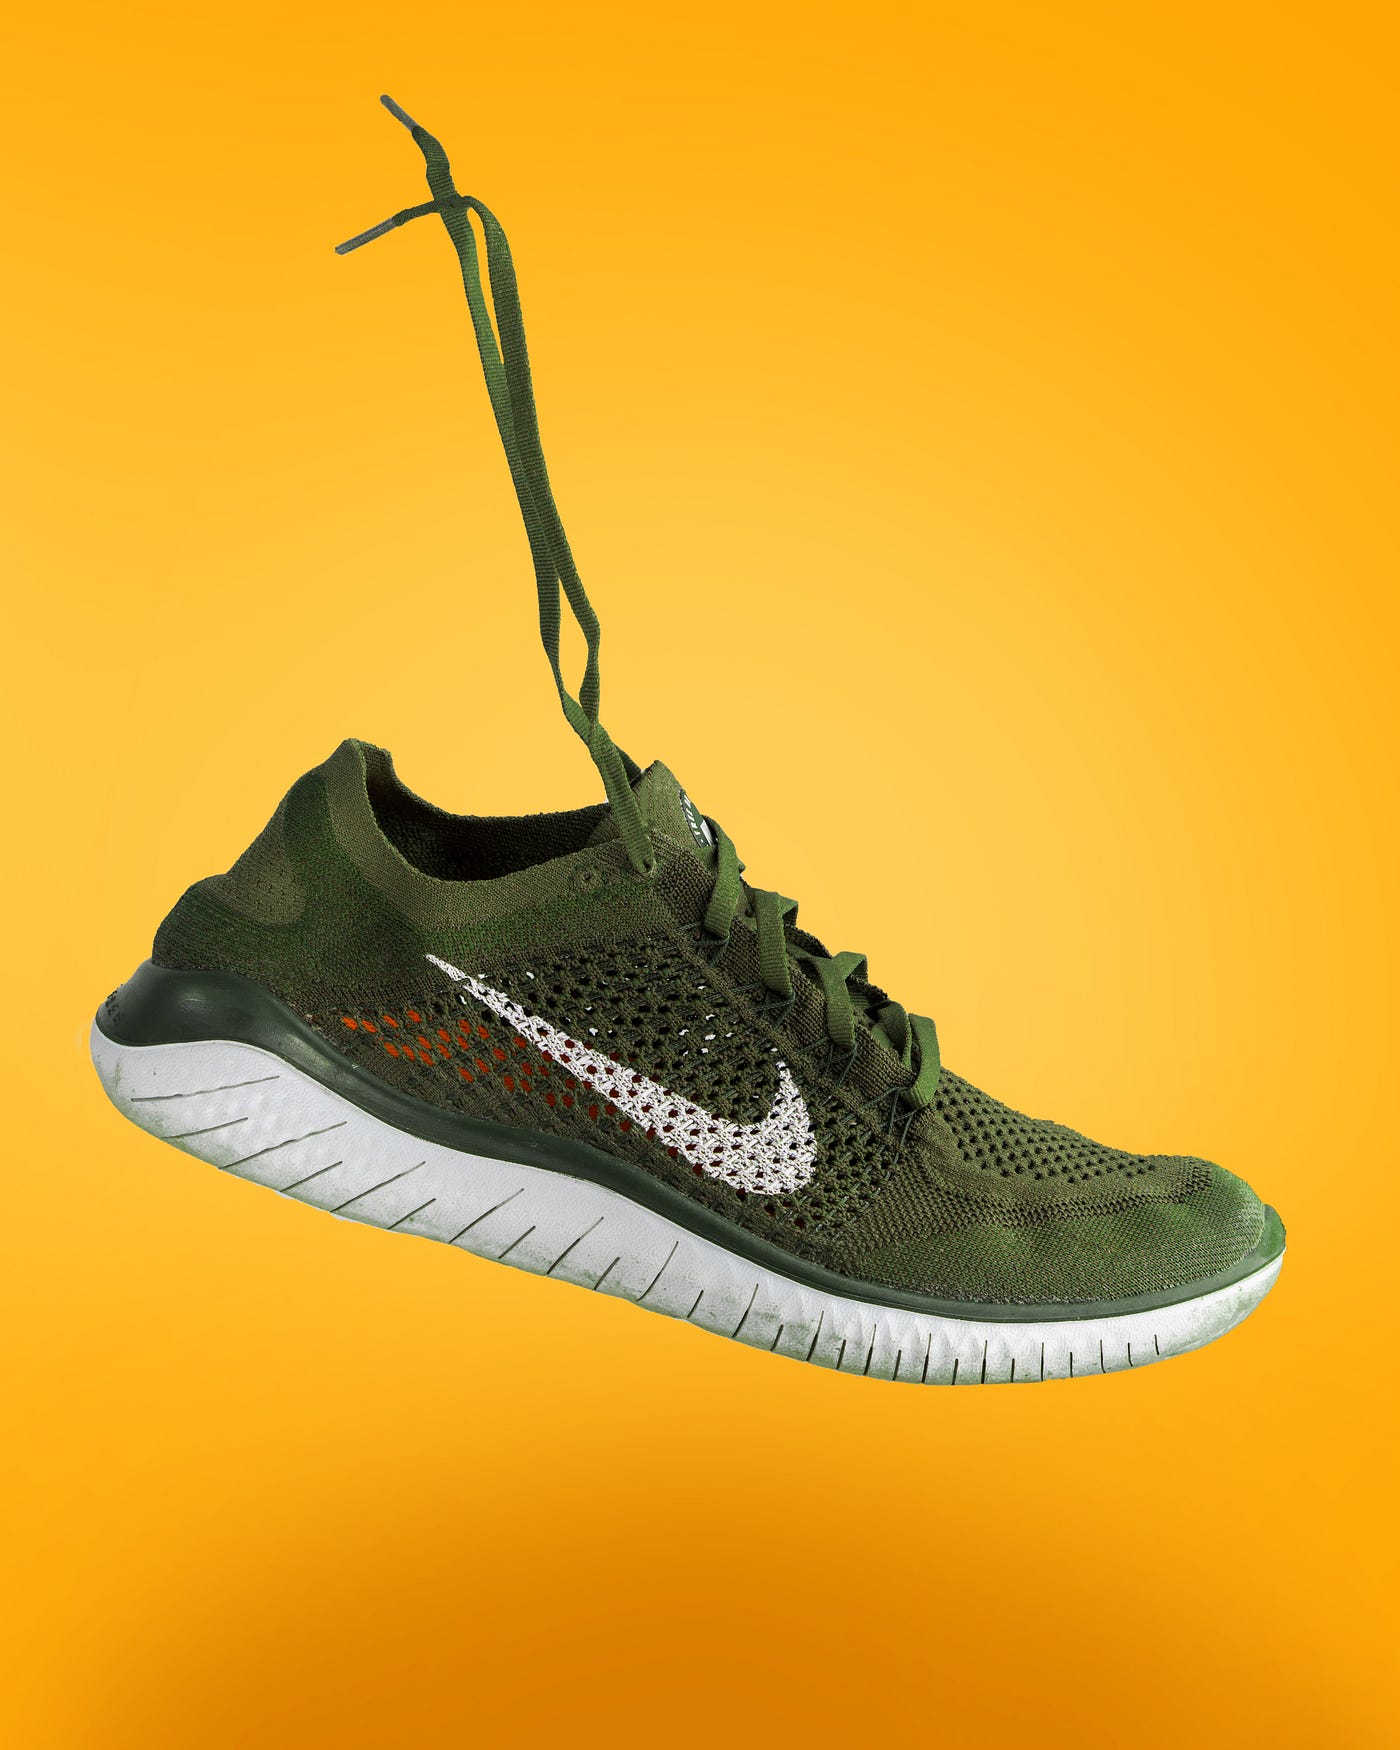 Genius or Not? — Nike's “Play New” Advertisement Campaign | Mofrad Muntasir | Better Marketing